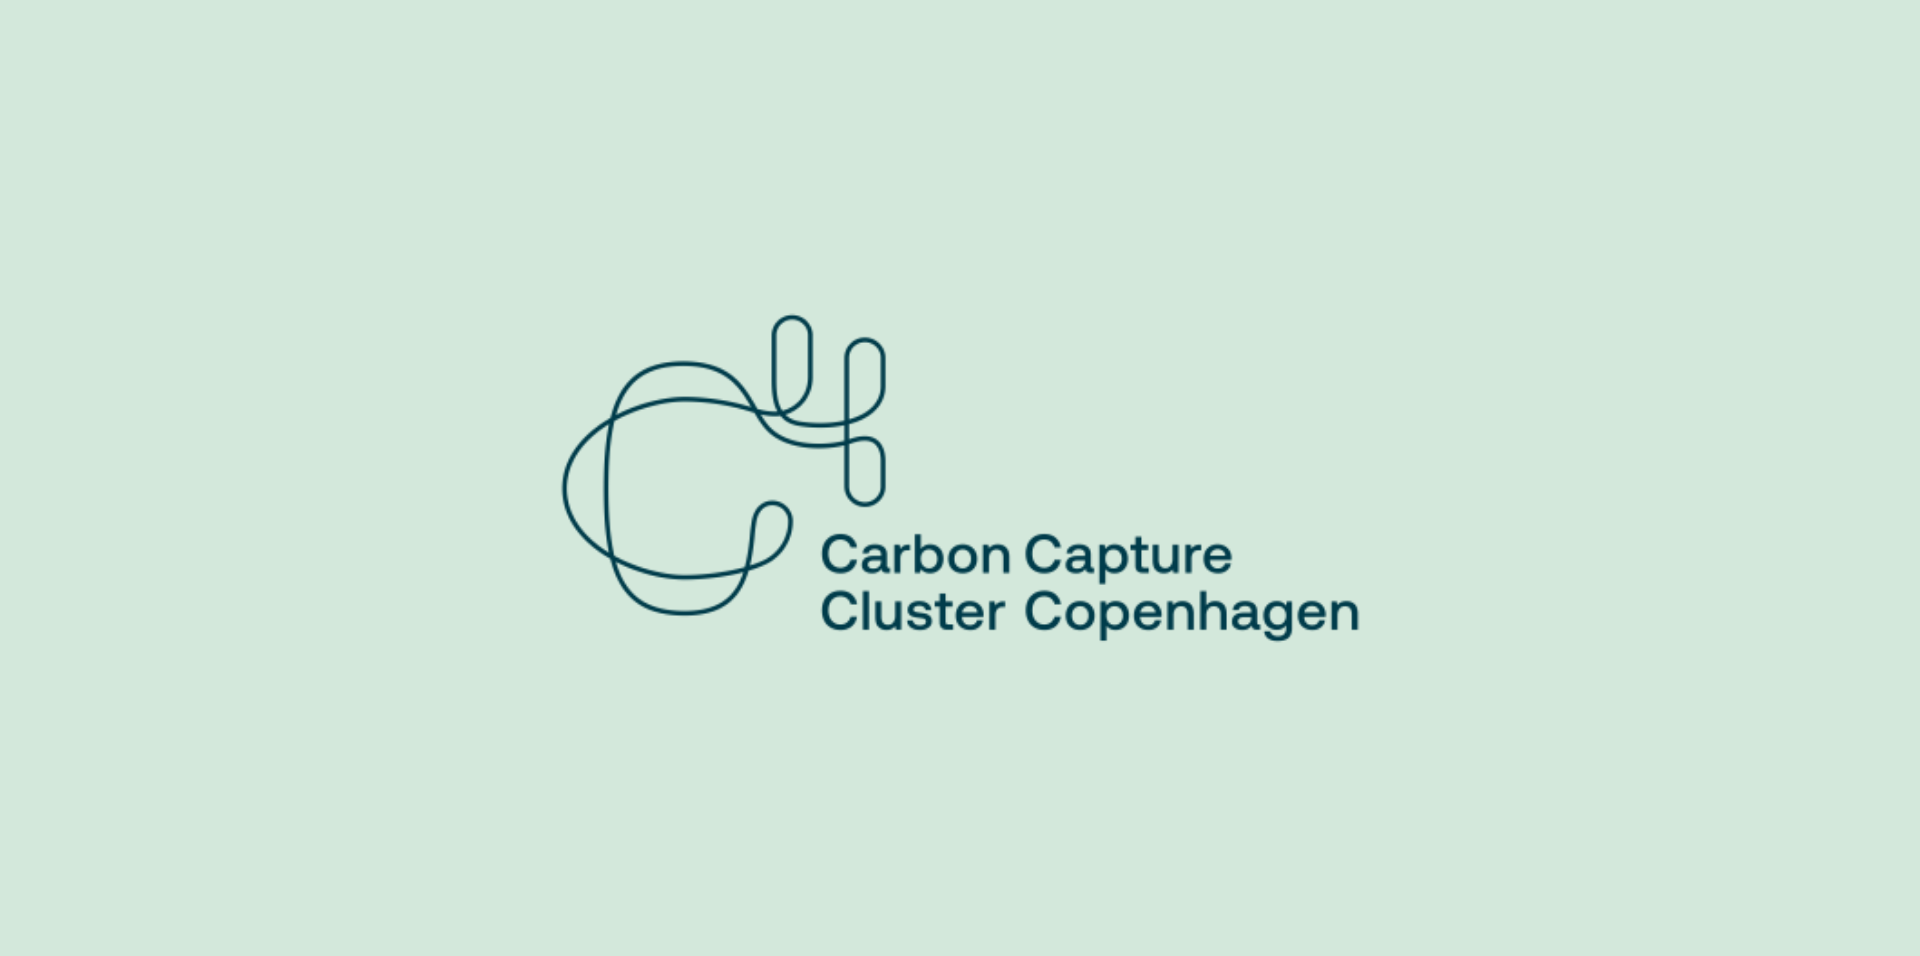 Carbon Capture Cluster Copenhagen logo